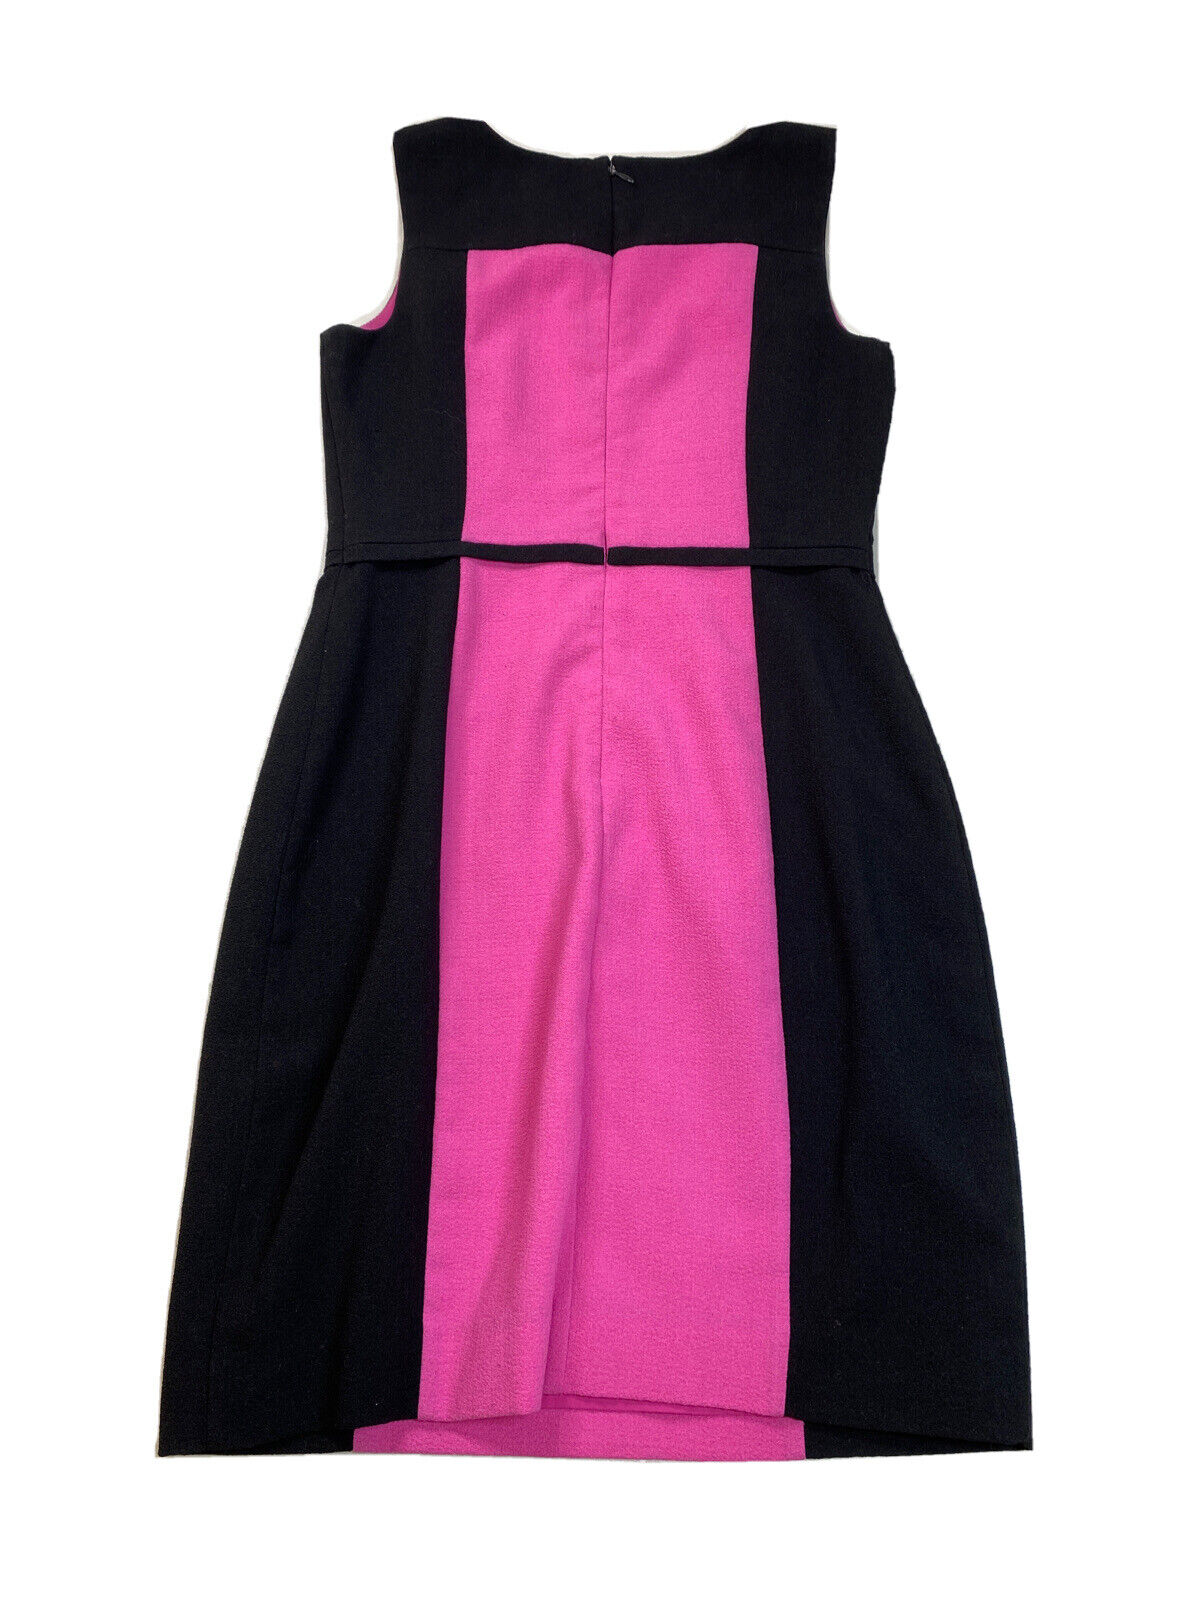 Banana Republic Women's Black/Pink Sleeveless Knee Length Shift Dress - 4